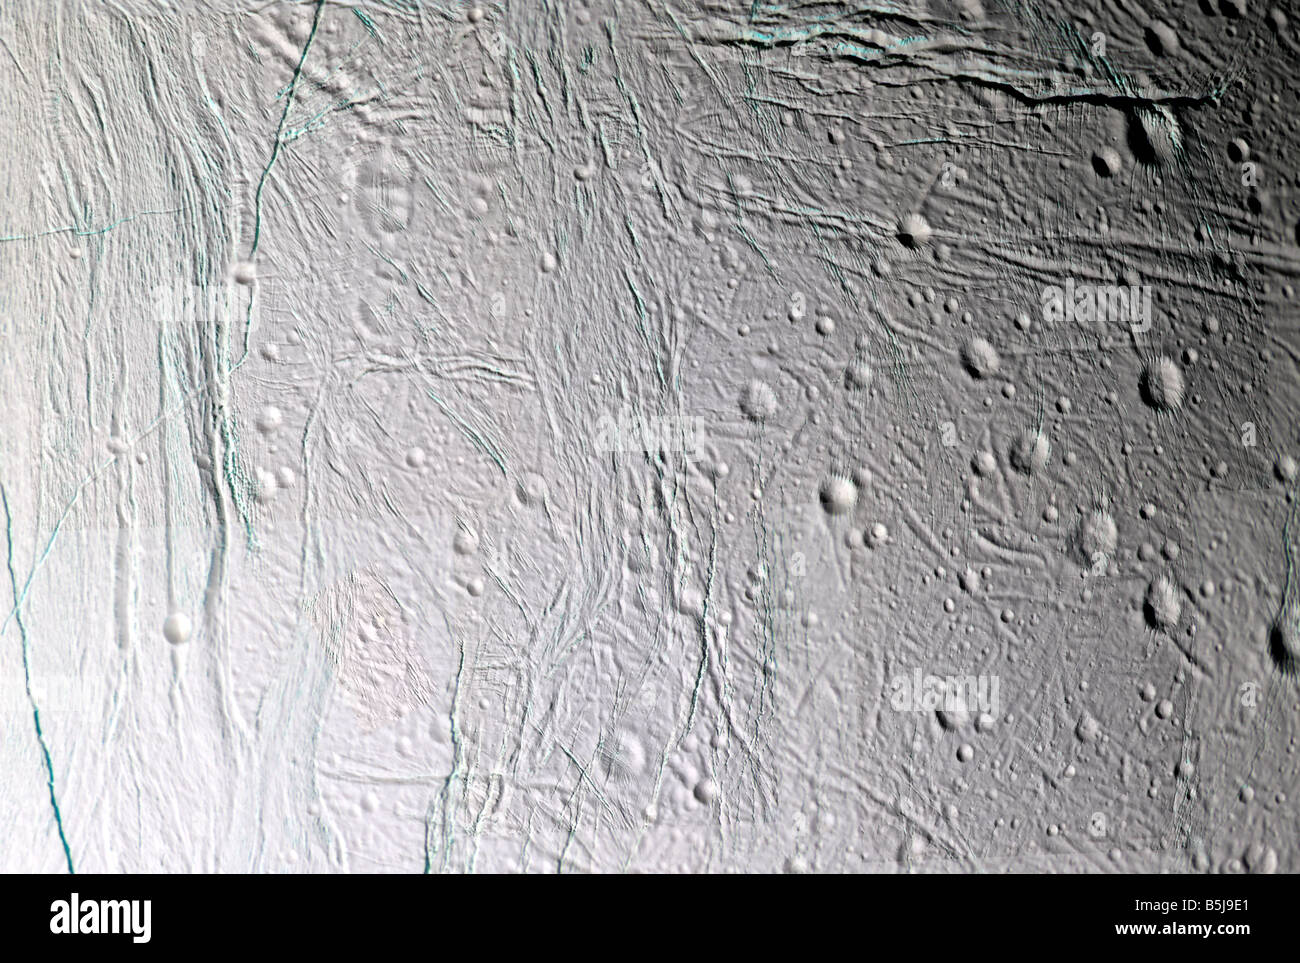 Saturn's moon Enceladus. Stock Photo